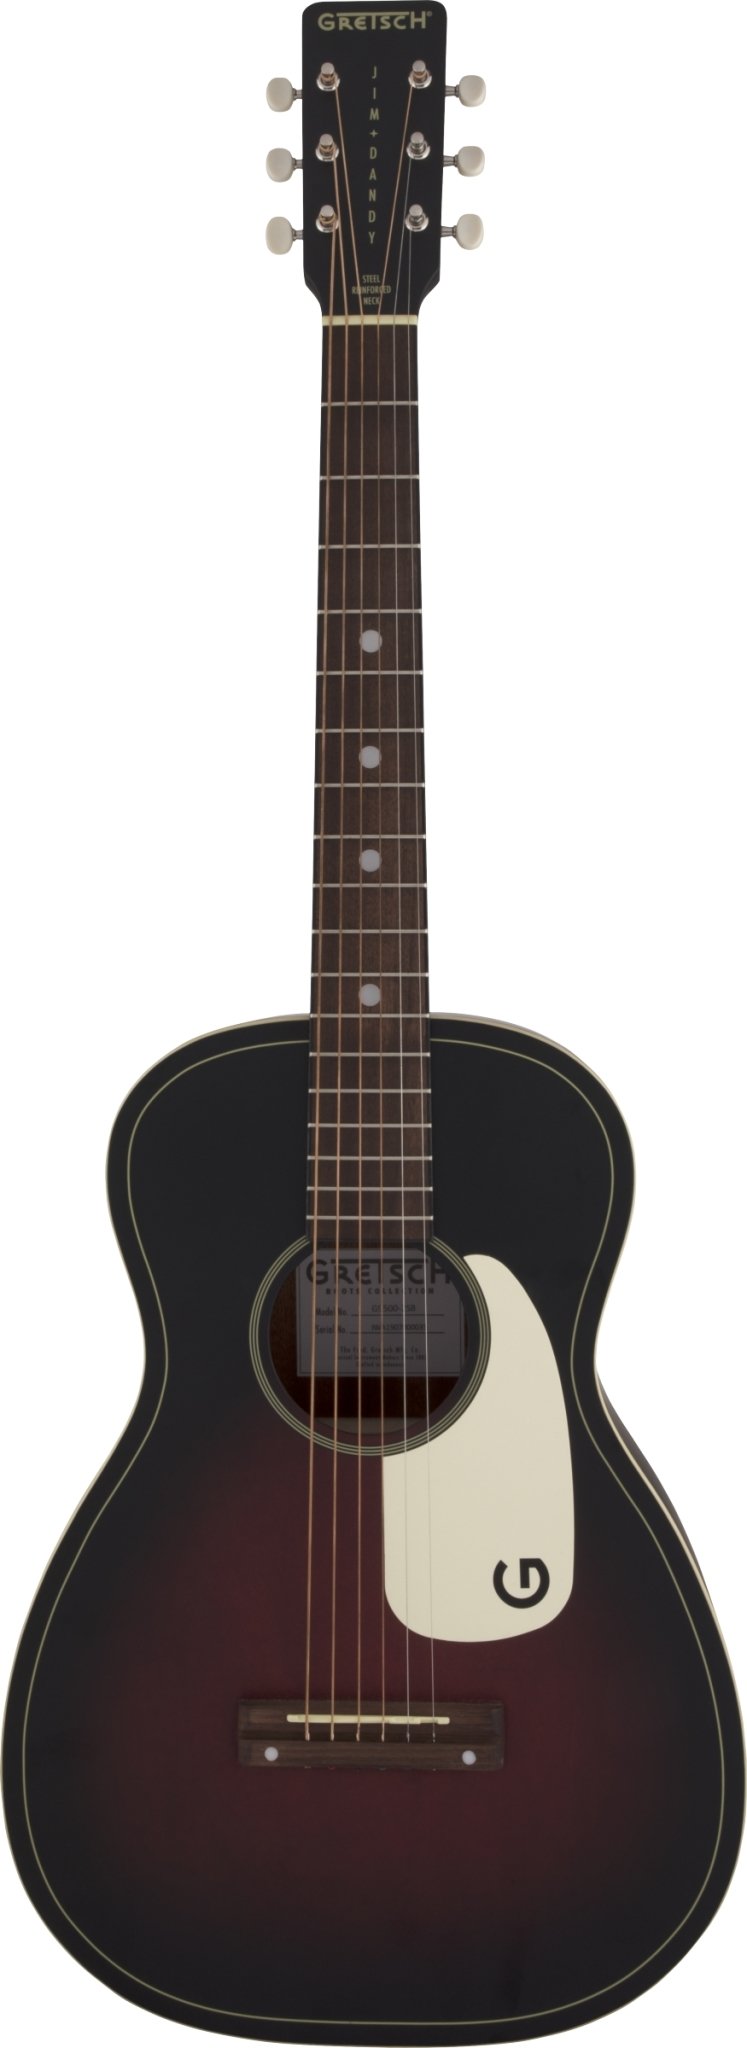 G9500 Jim Dandy 24" Scale Flat Top Guitar, 2-Color Sunburst - The Musicstore UK